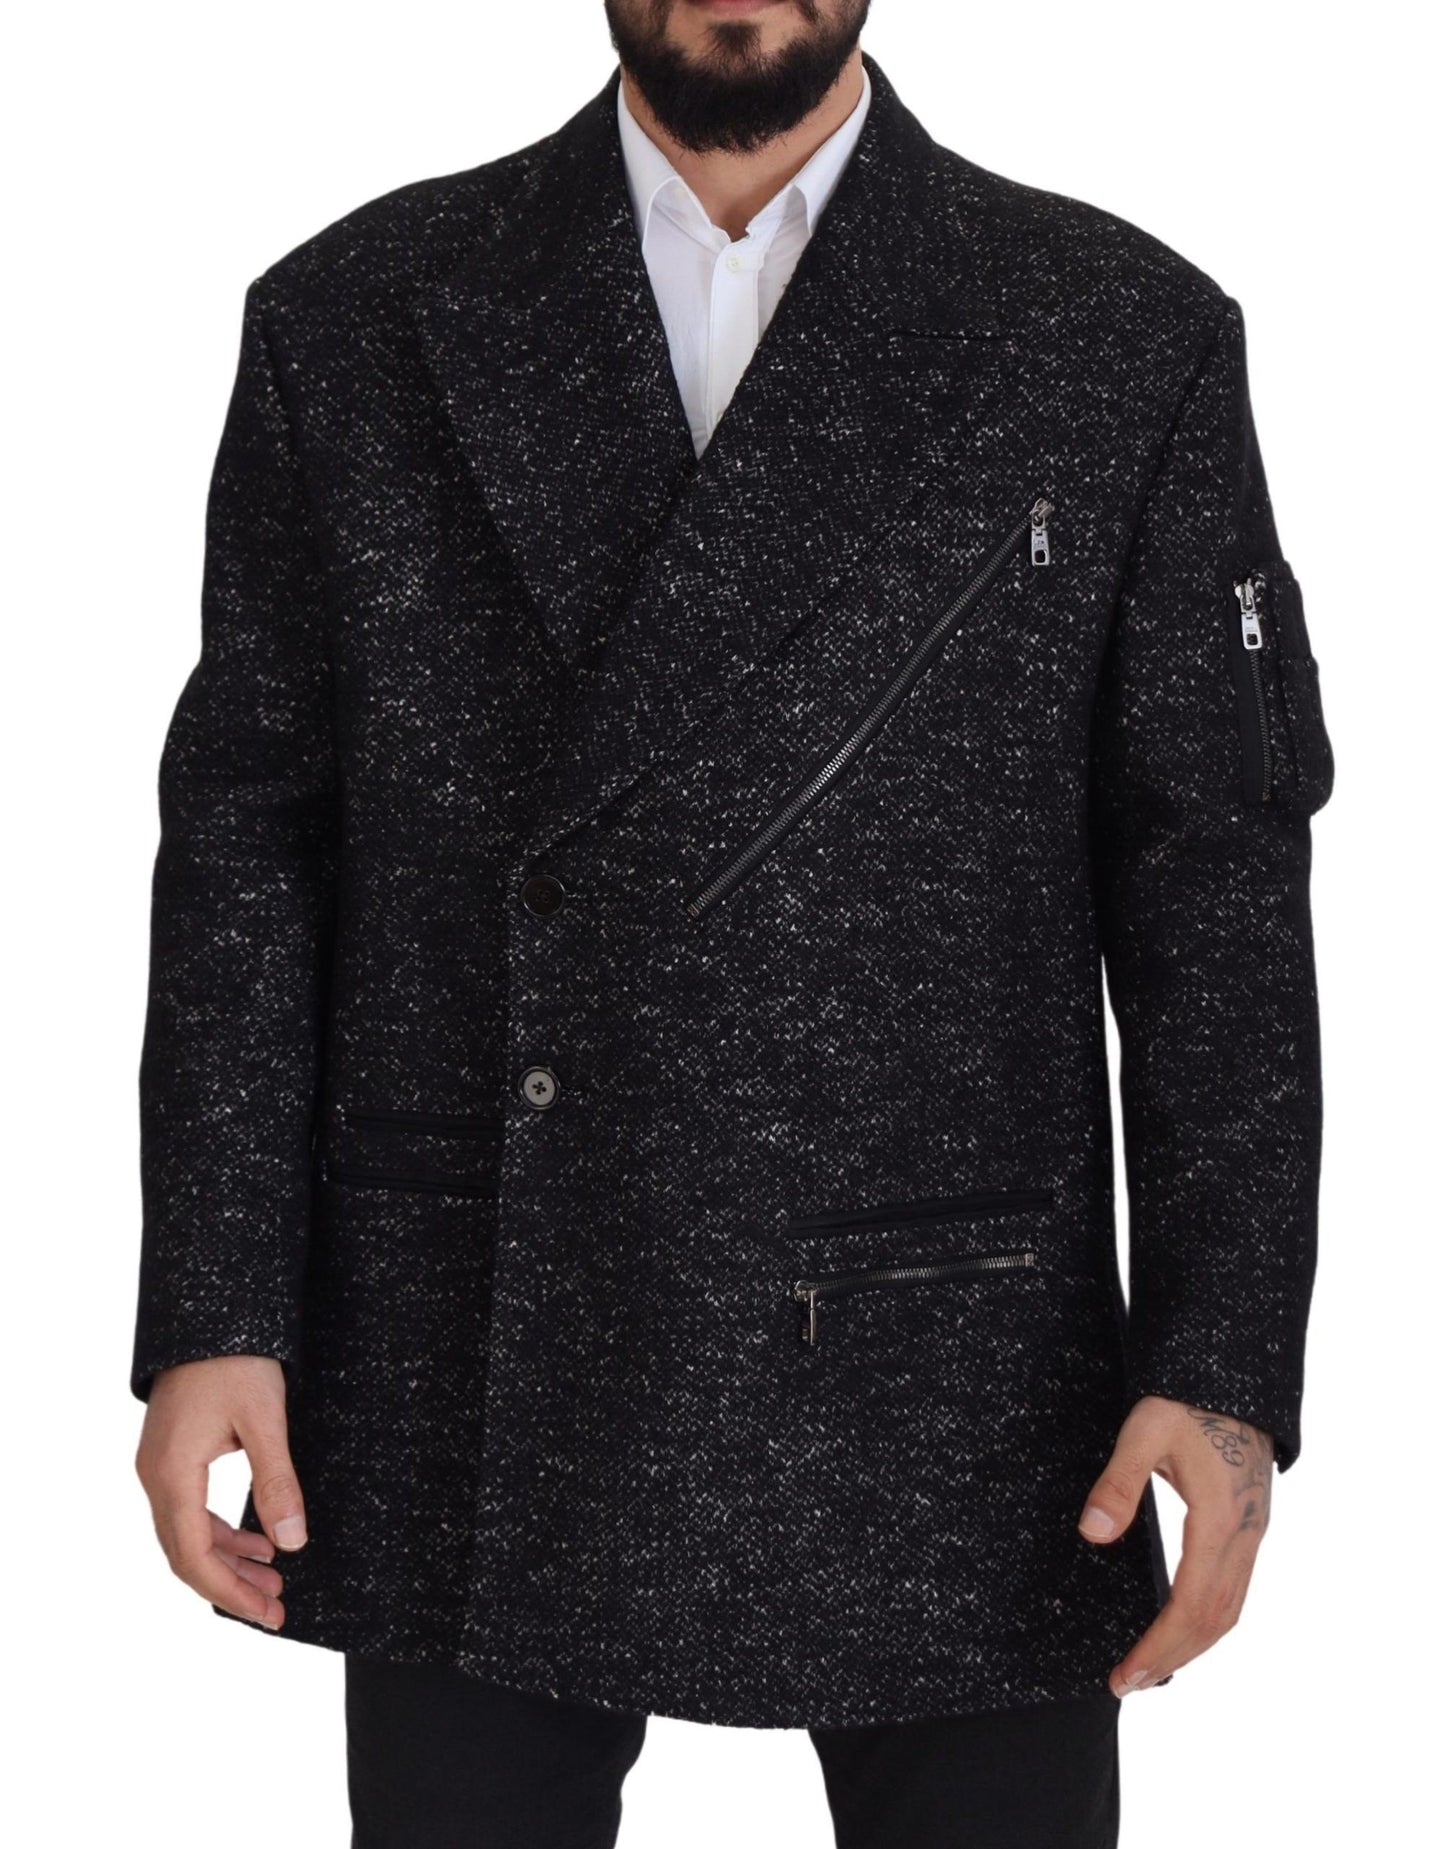 Sleek Patterned Wool Double Breasted Jacket